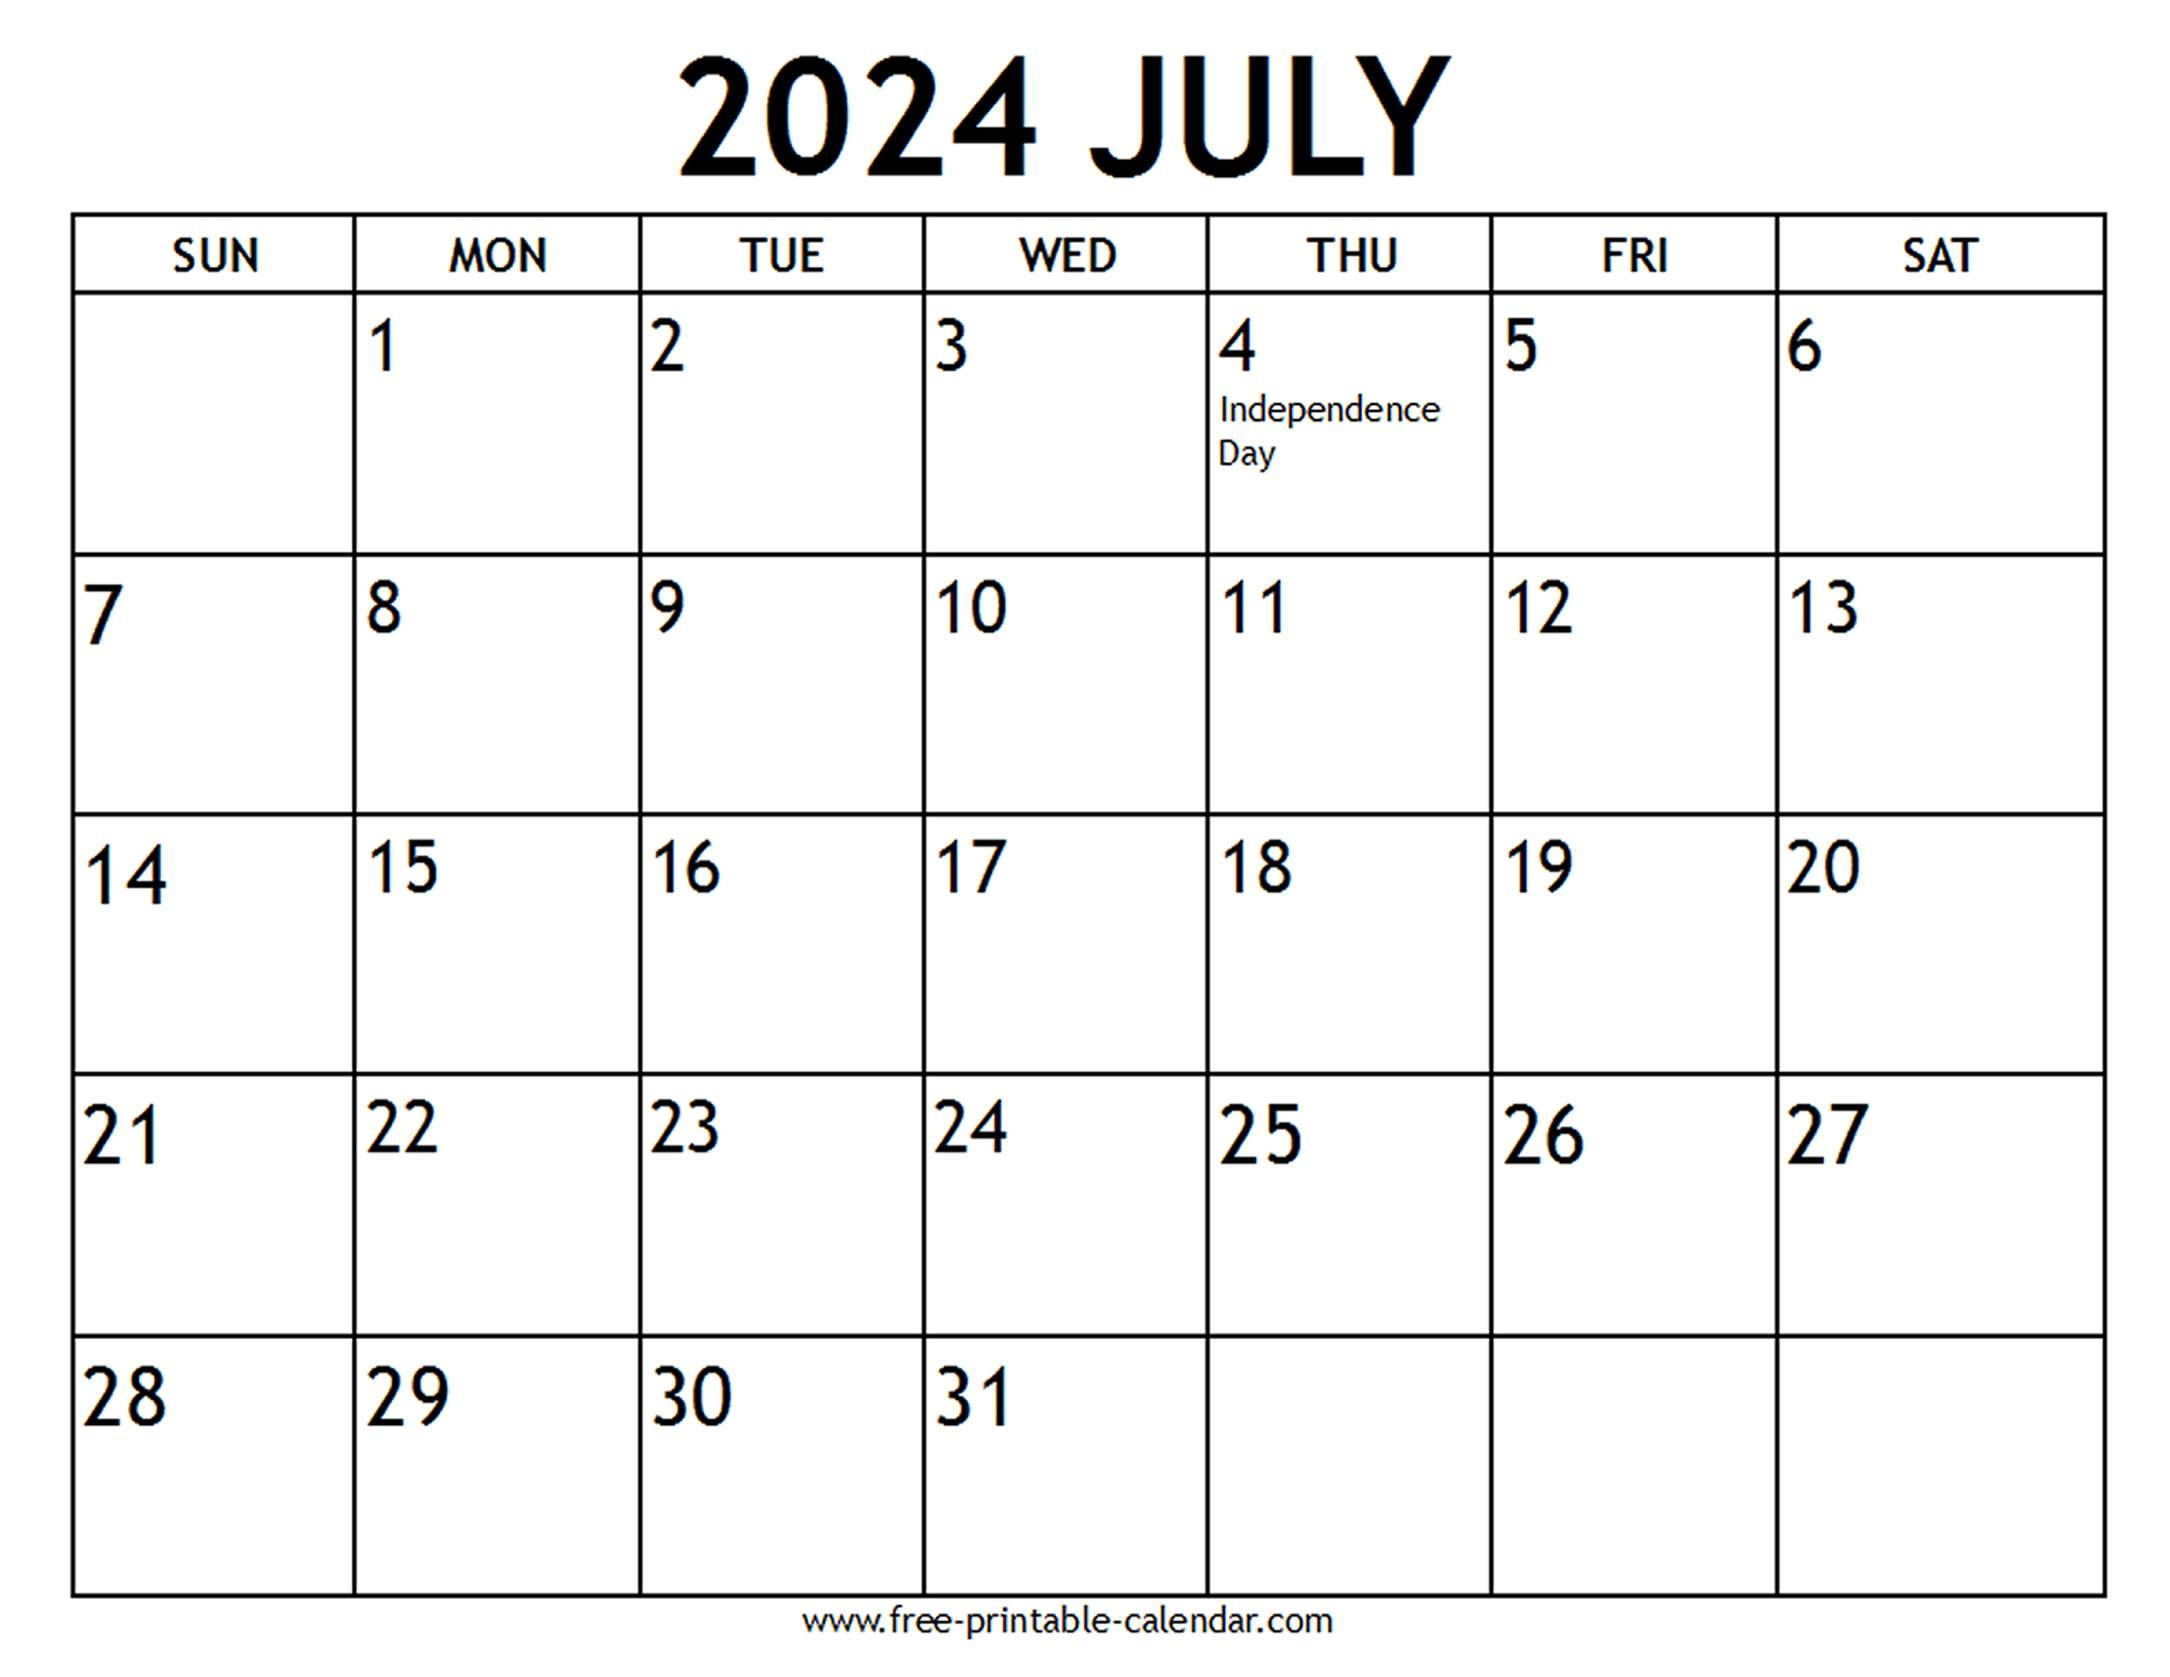 July 2024 Calendar Us Holidays - Free-Printable-Calendar within July Calendar With Holidays 2024